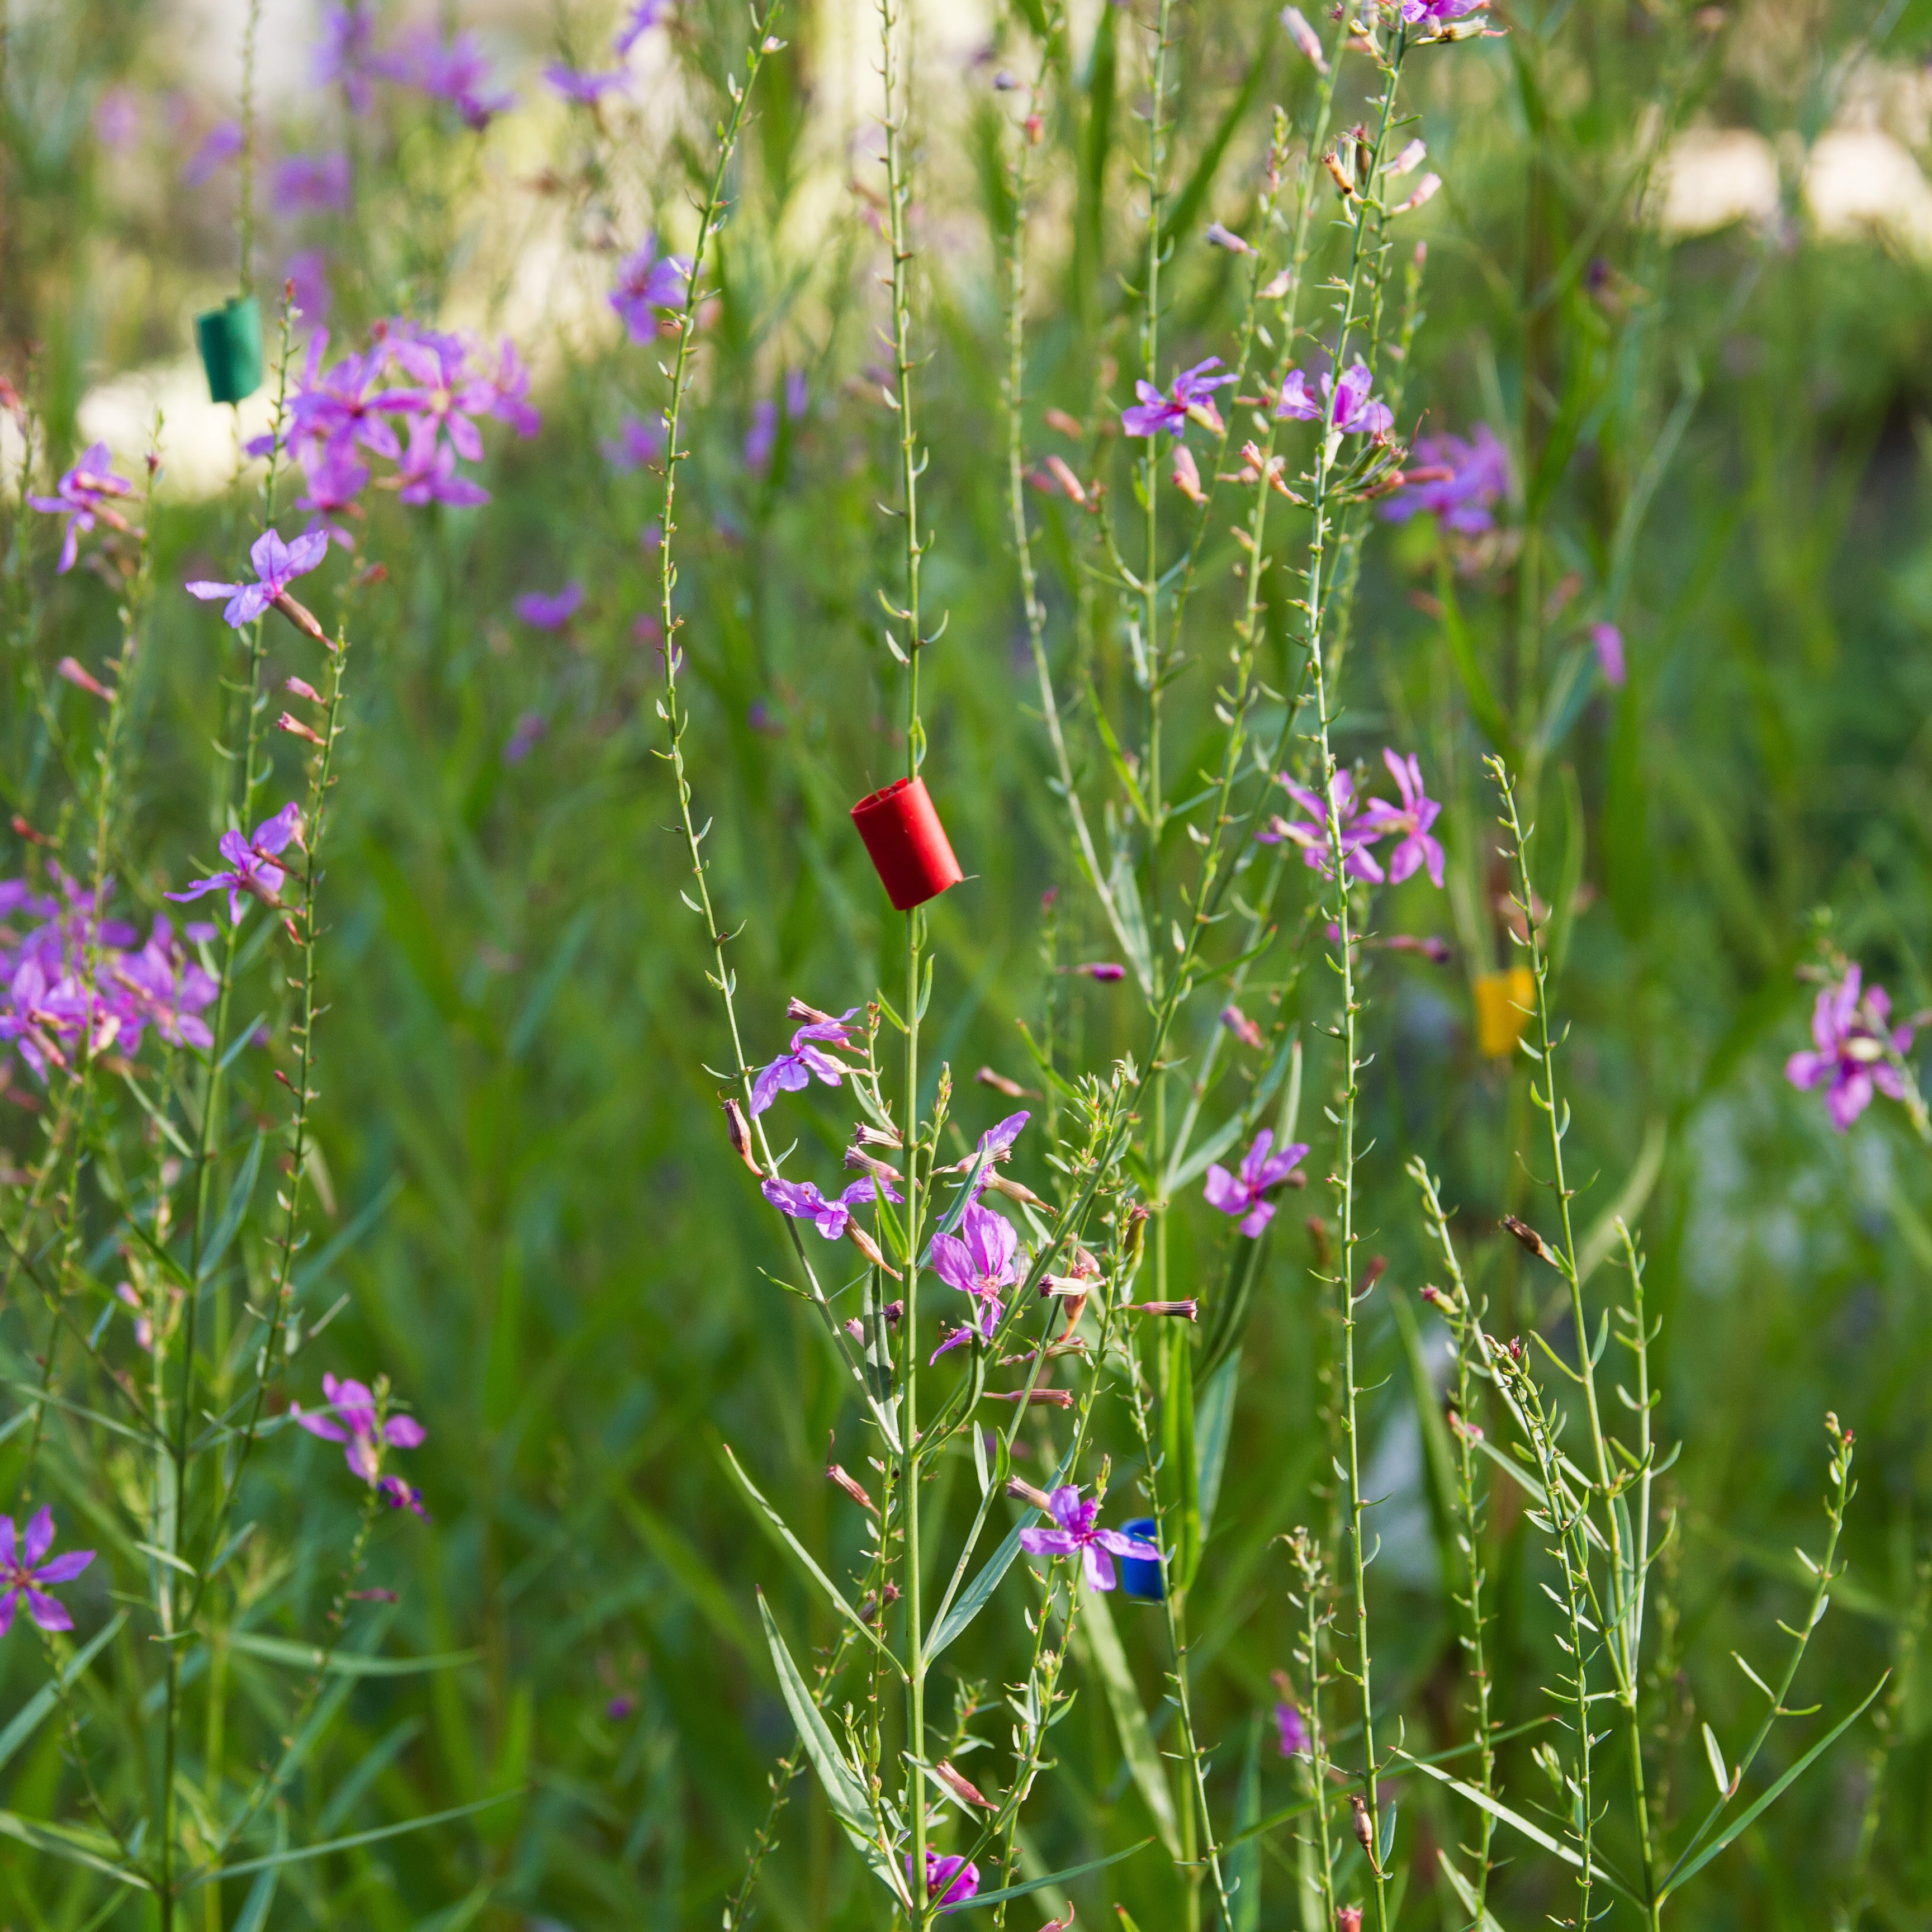 What influences the season length of perennial herbs?